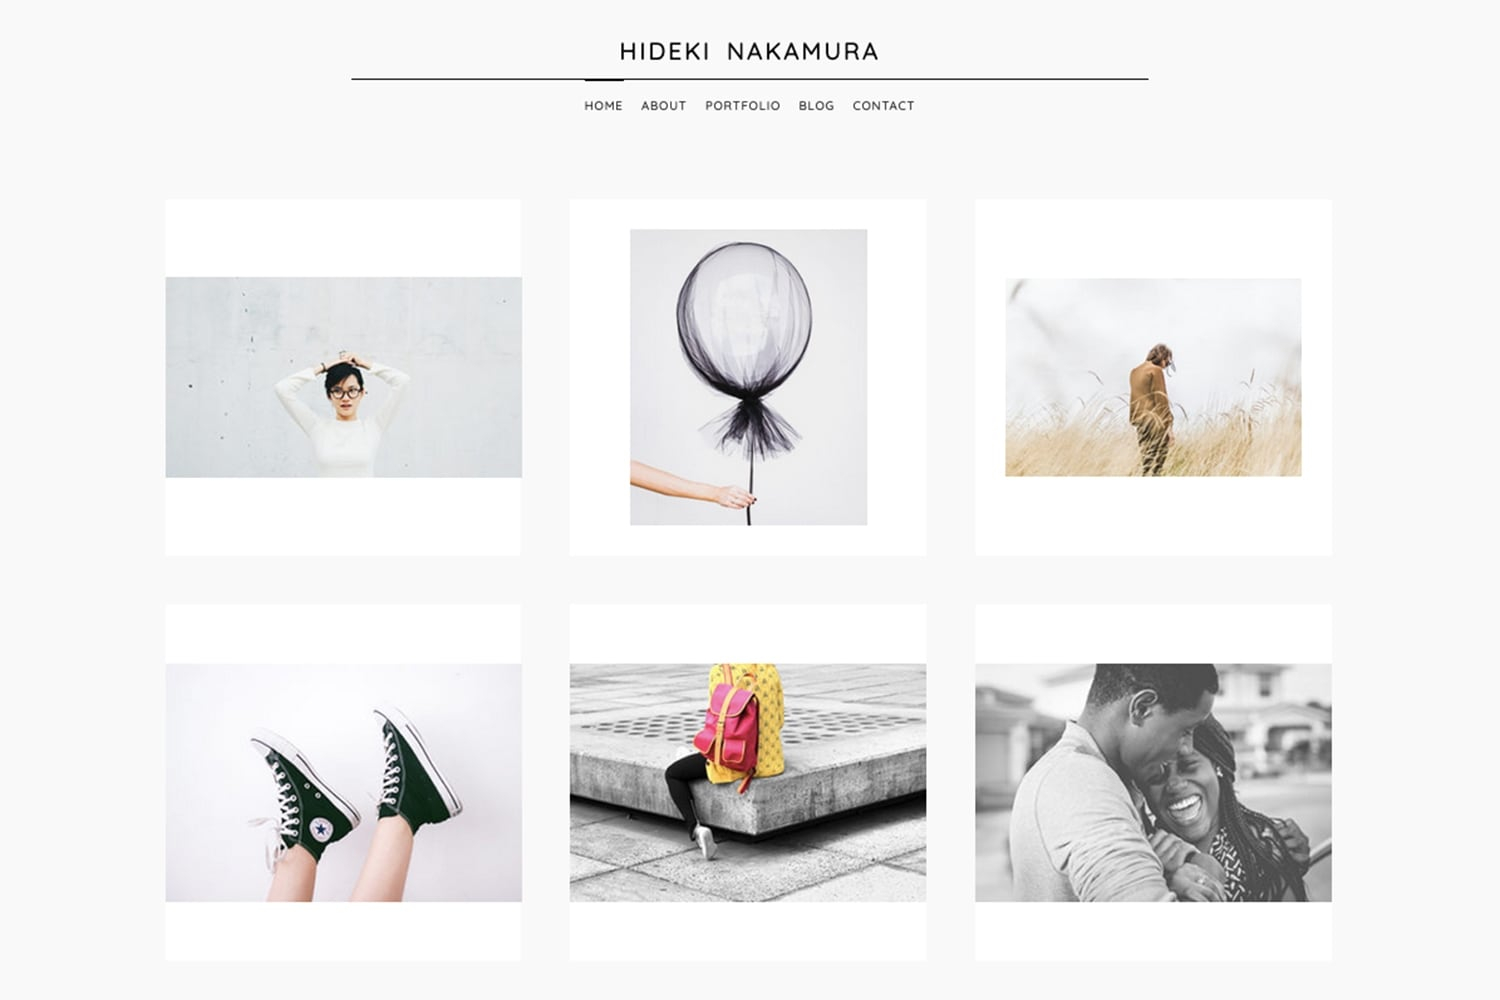 Nakamura - A beautiful WordPress Theme for Photographers